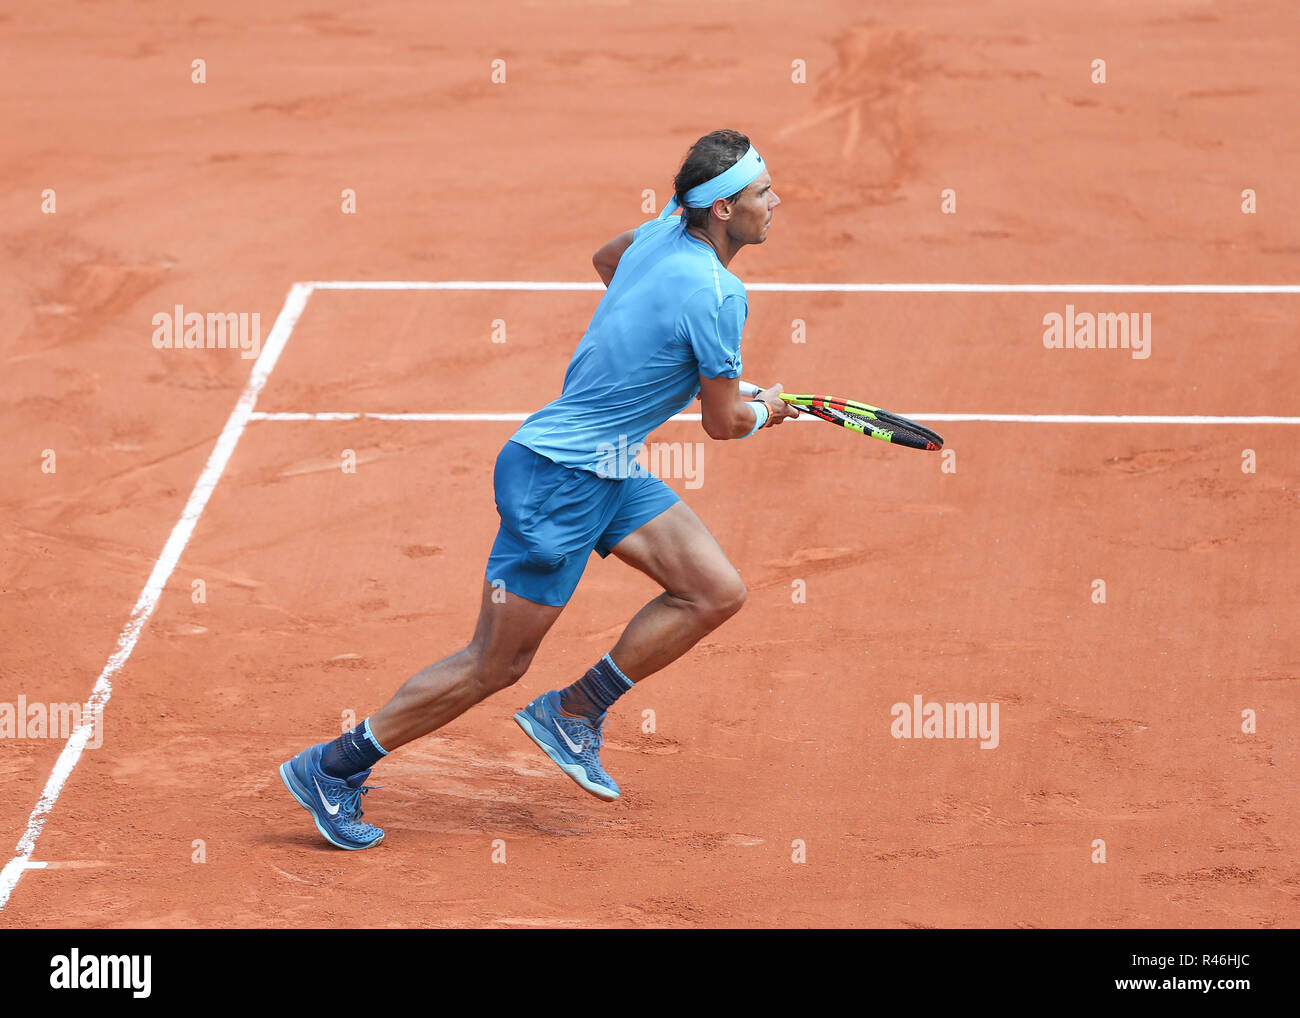 Spanish tennis player Rafael Nadal running forward during French Open 2018 tennis tournament, Paris, France Stock Photo